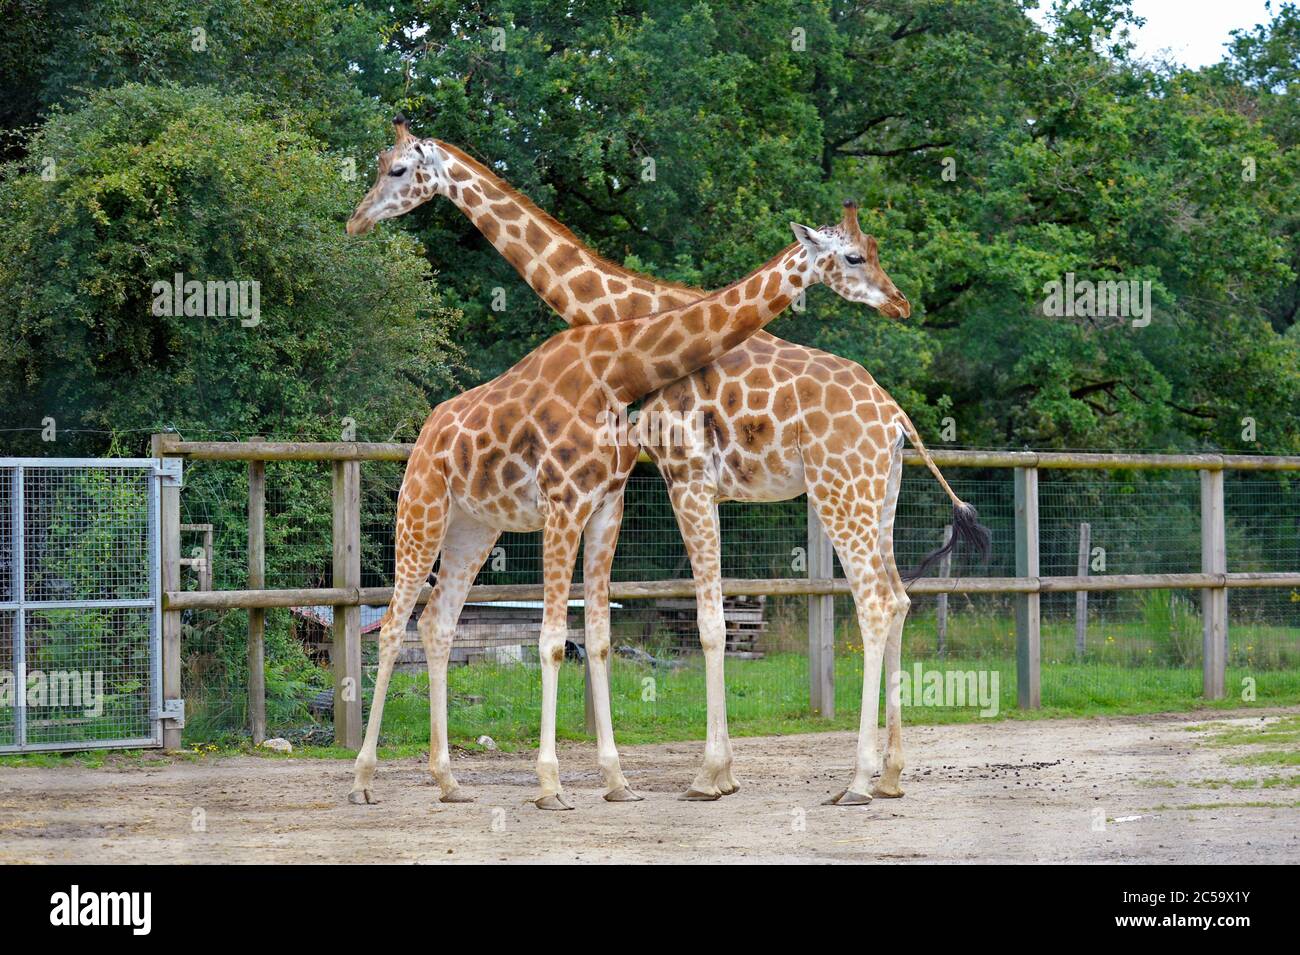 Pair of Giraffes at nature park Mervent France Stock Photo